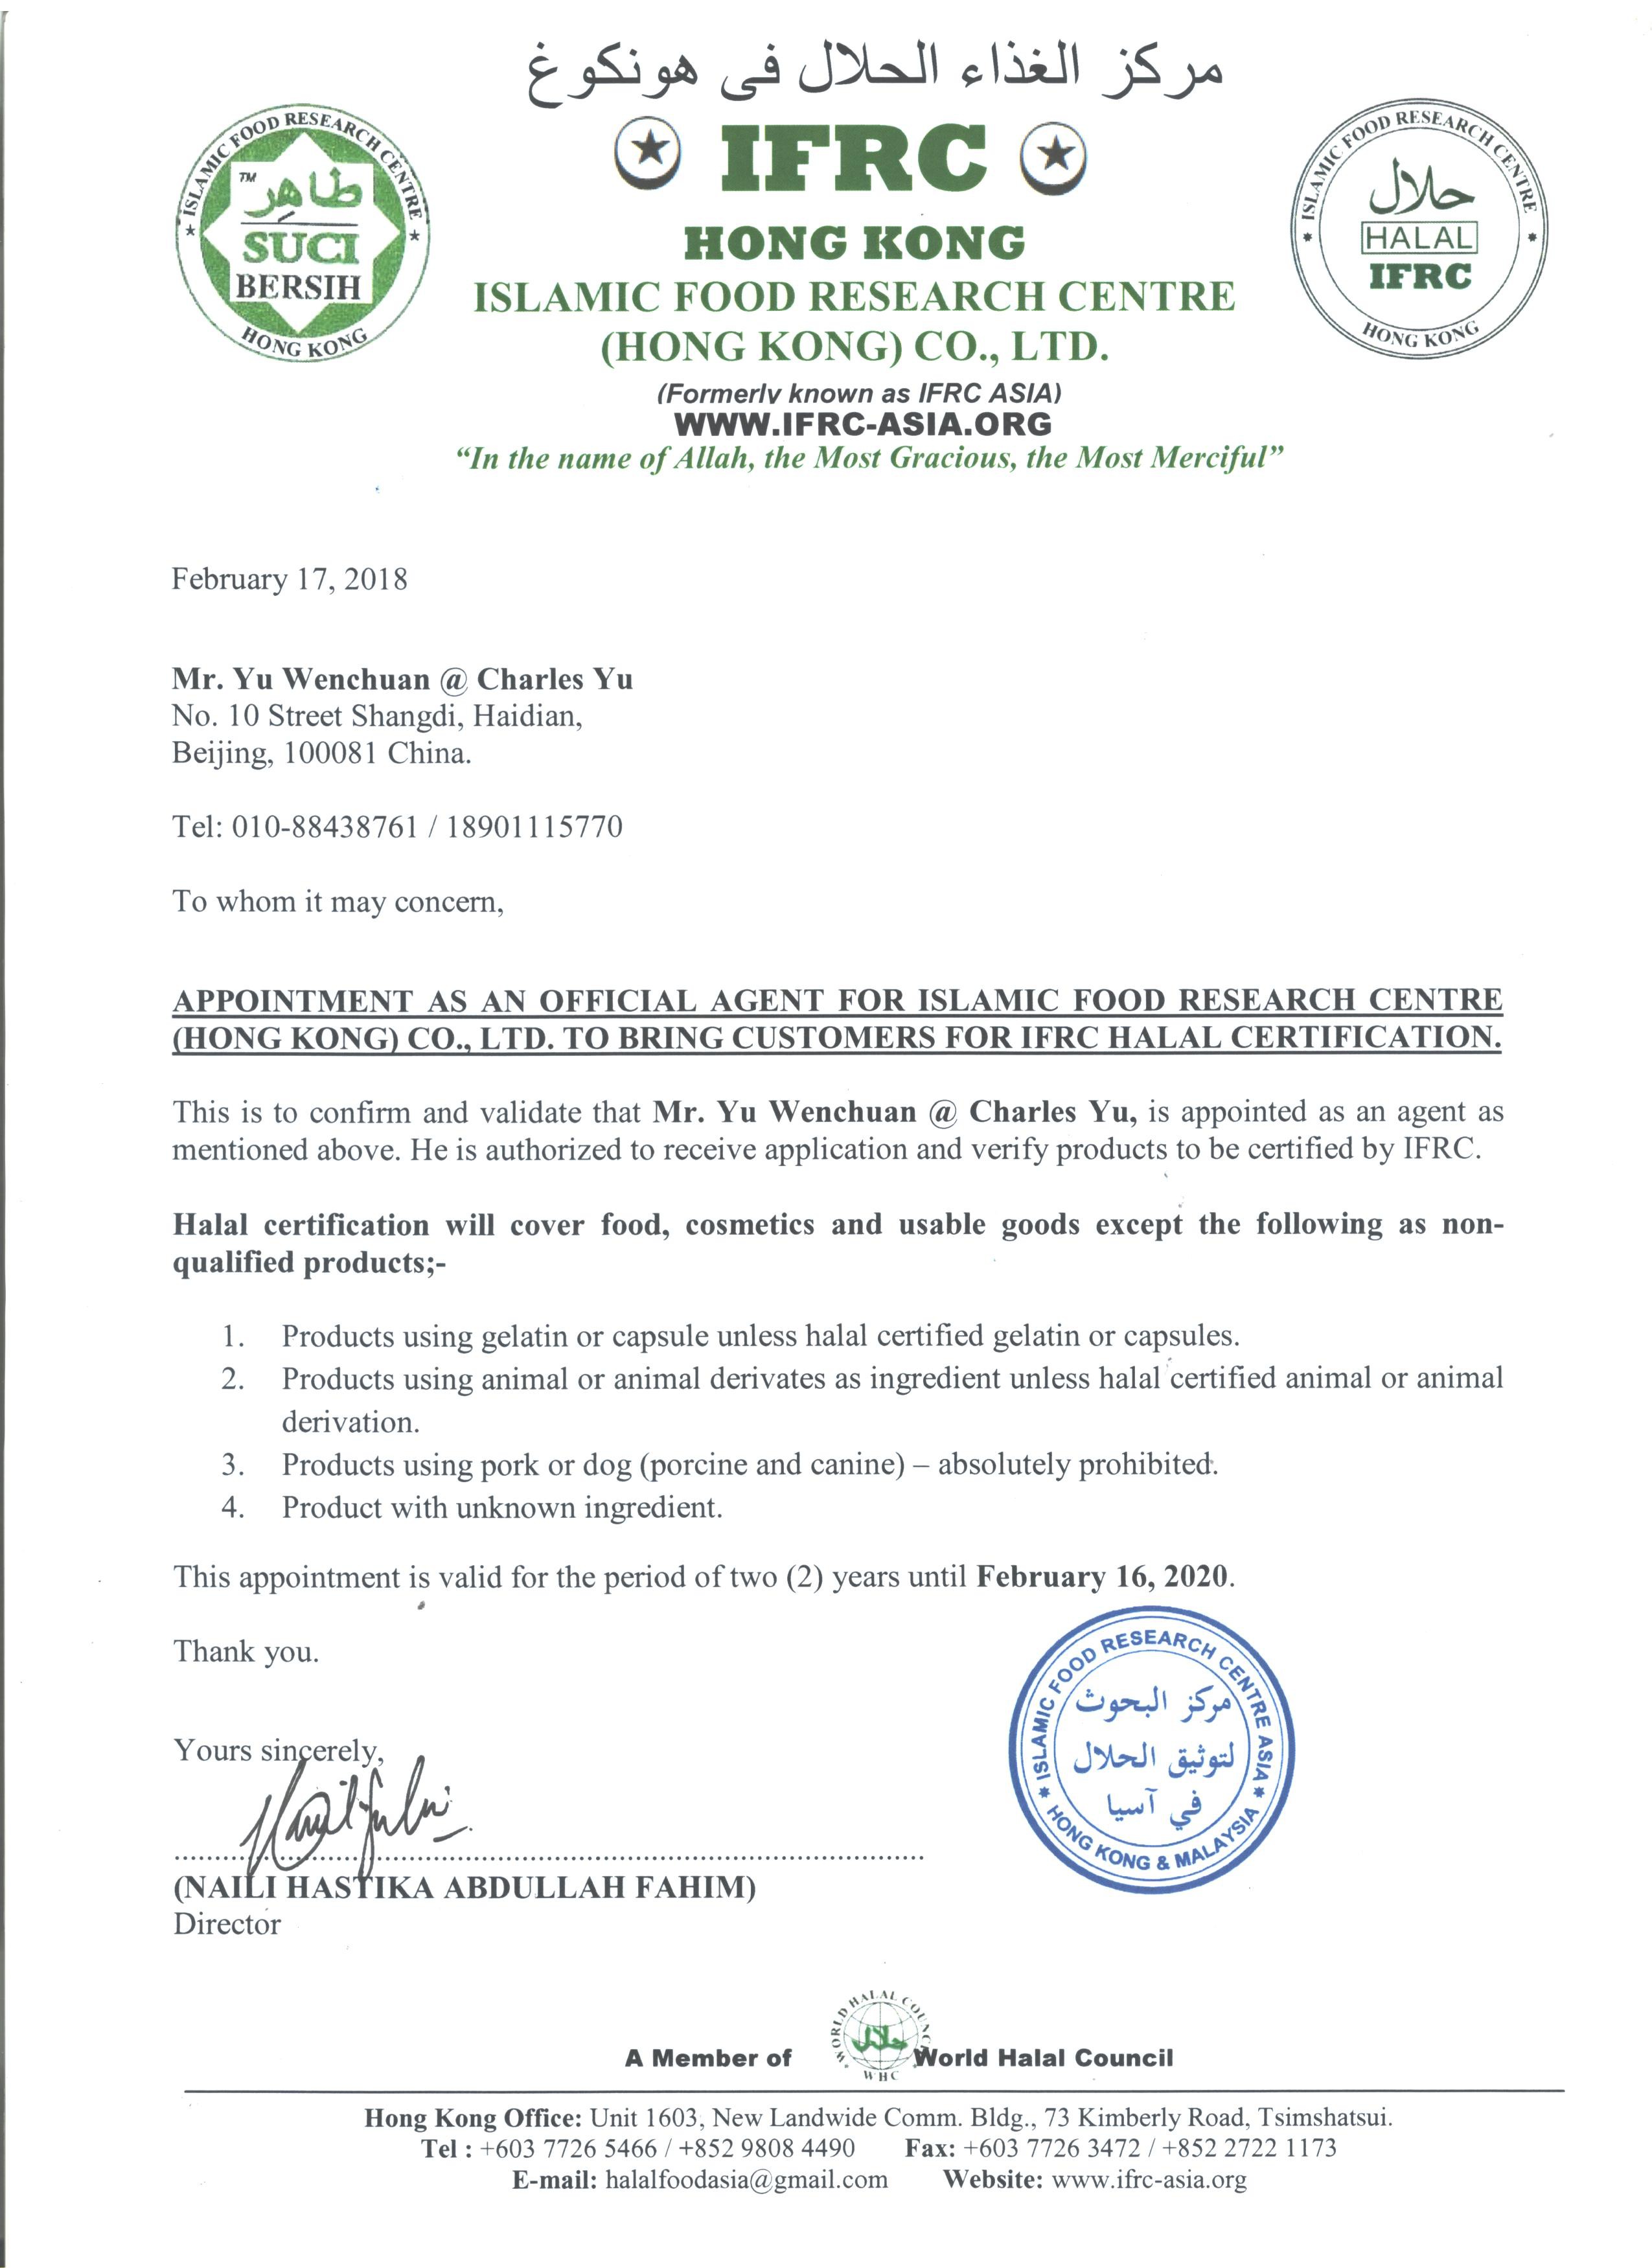 IFRC Halal清真认证授权书